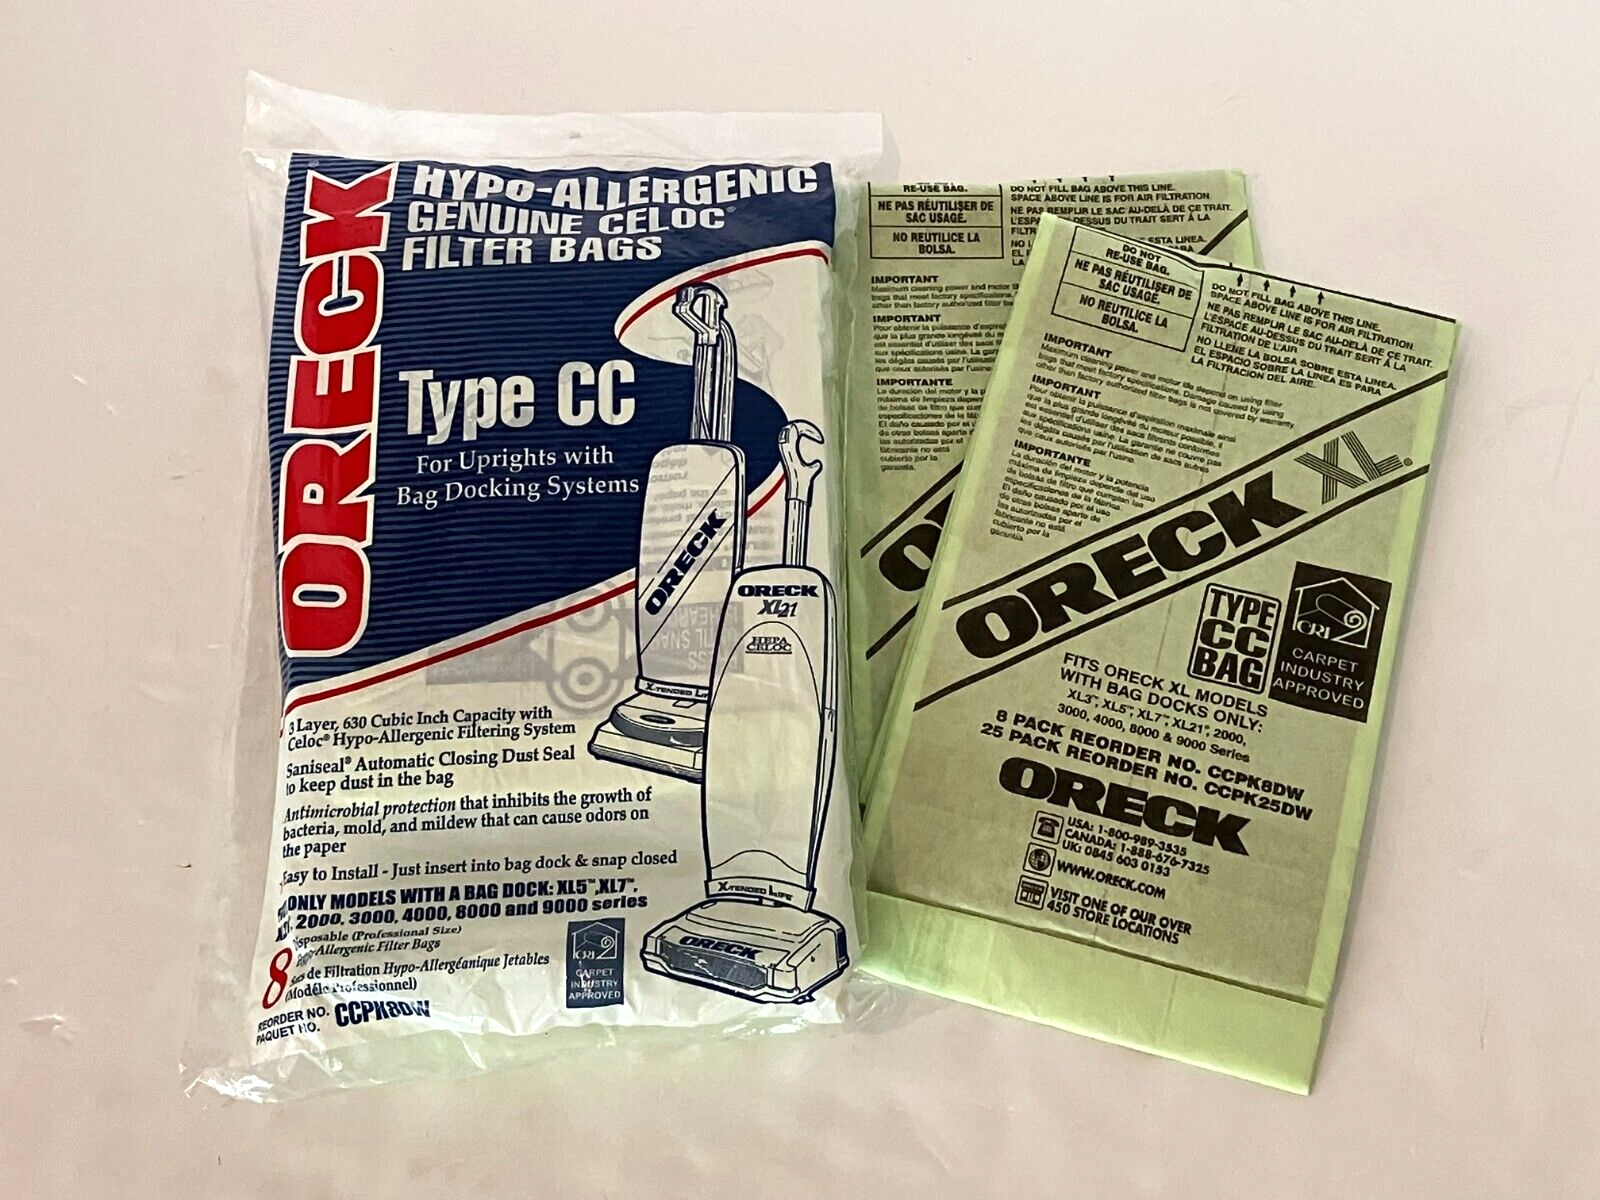 Lot of 10 Oreck XL Type CC Hypo-Allergenic Vacuum Cleaner Bags...